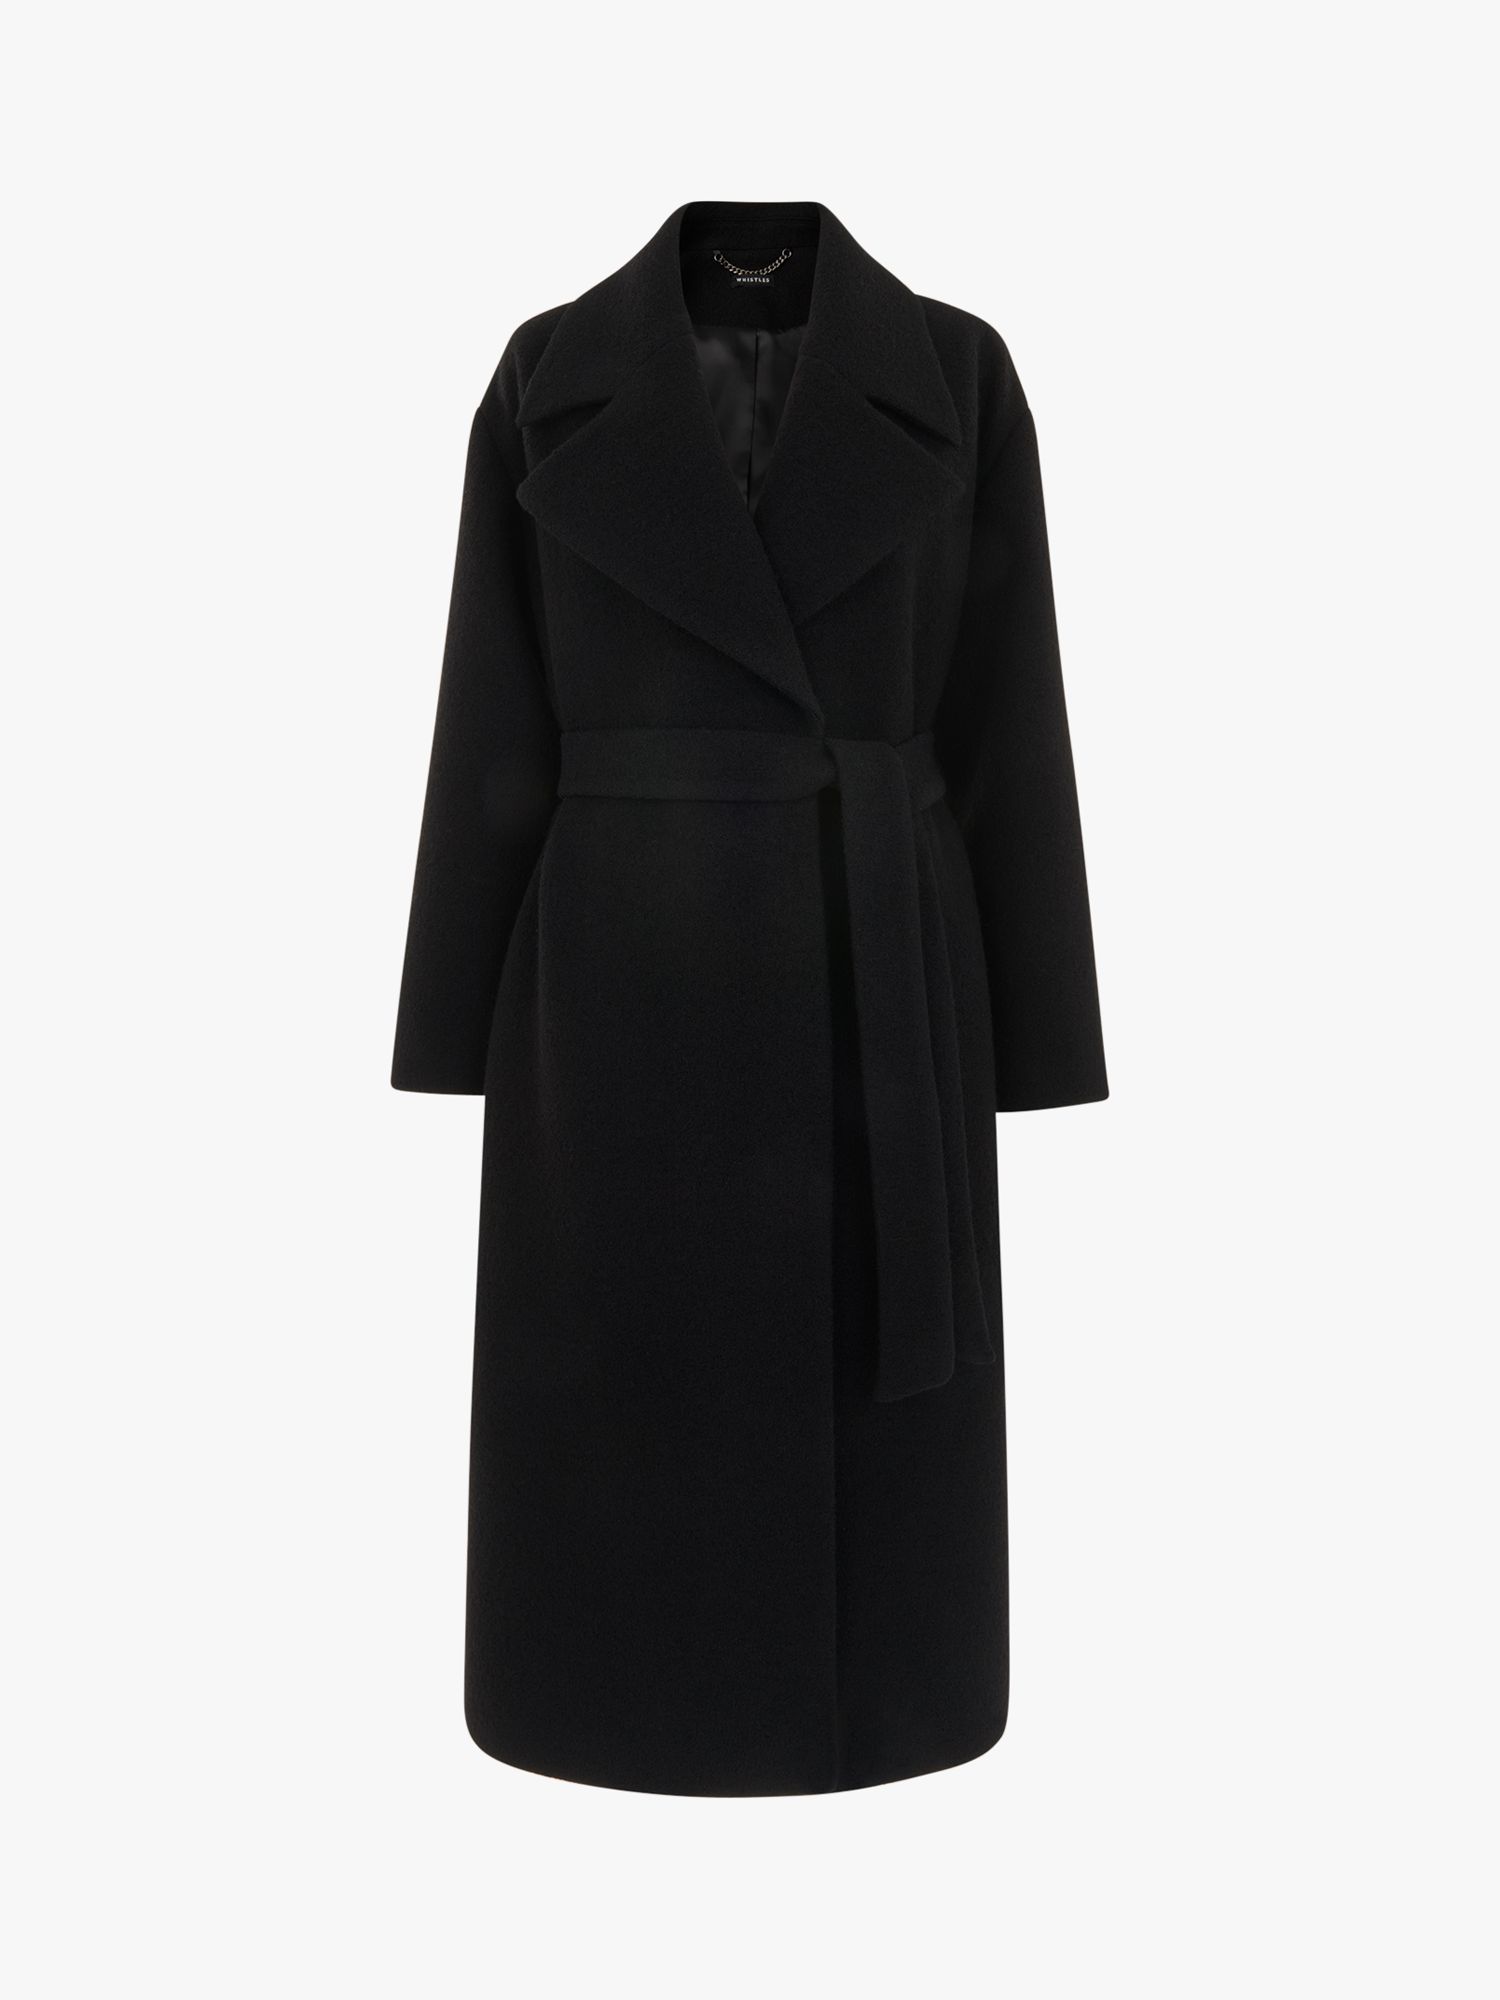 Whistles Lorna Wrap Wool Coat, Black at John Lewis & Partners